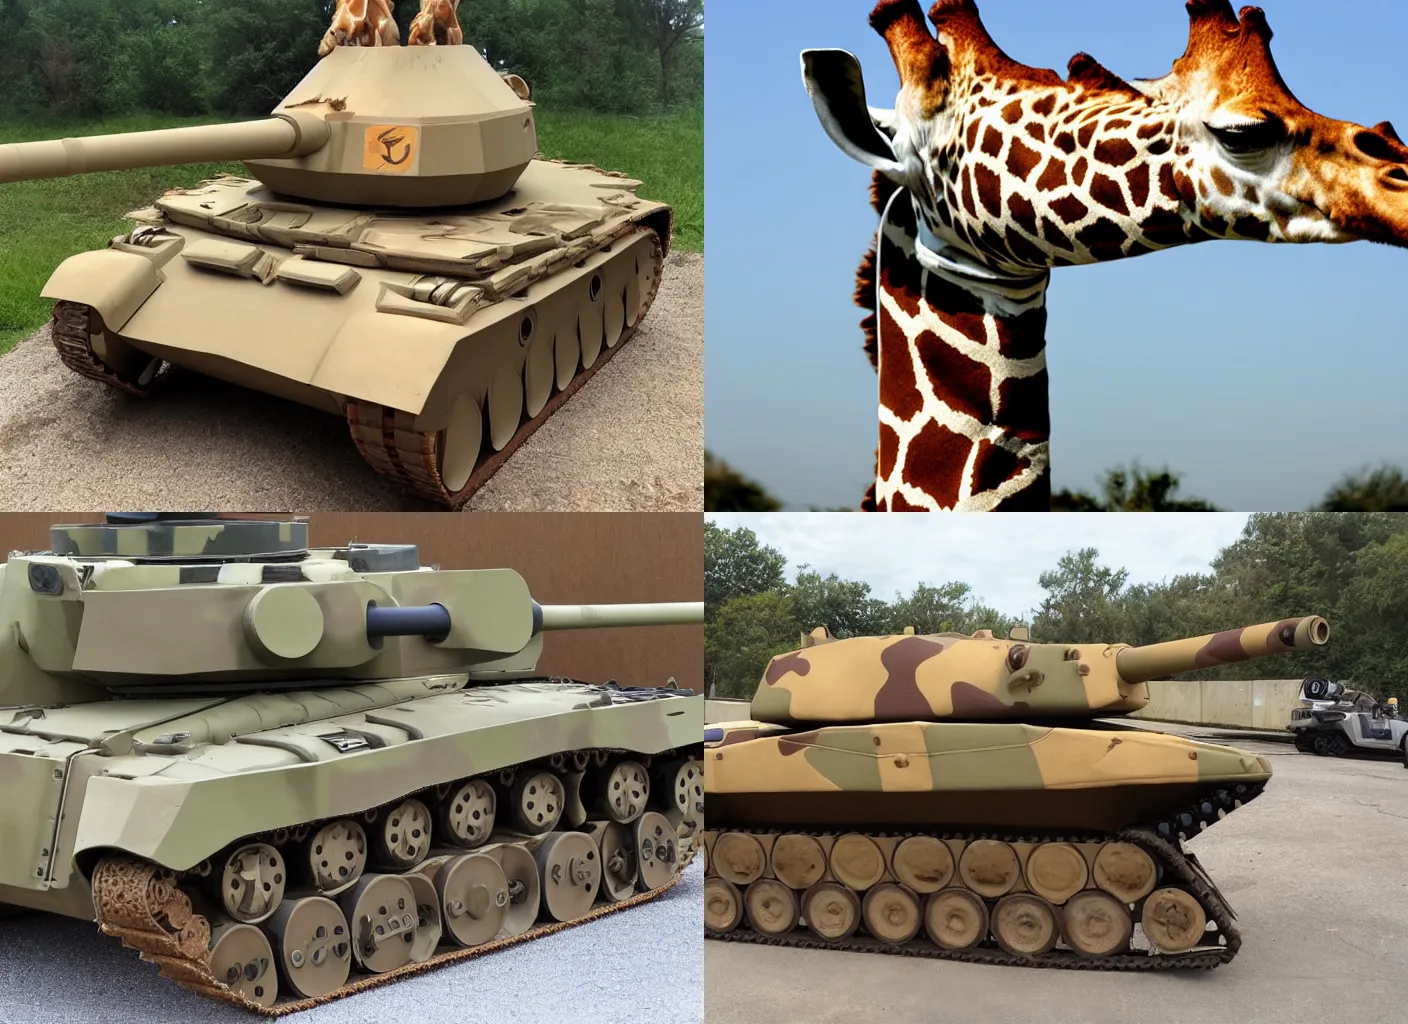 Prompt: tank in the shape of giraffe with giraffe head